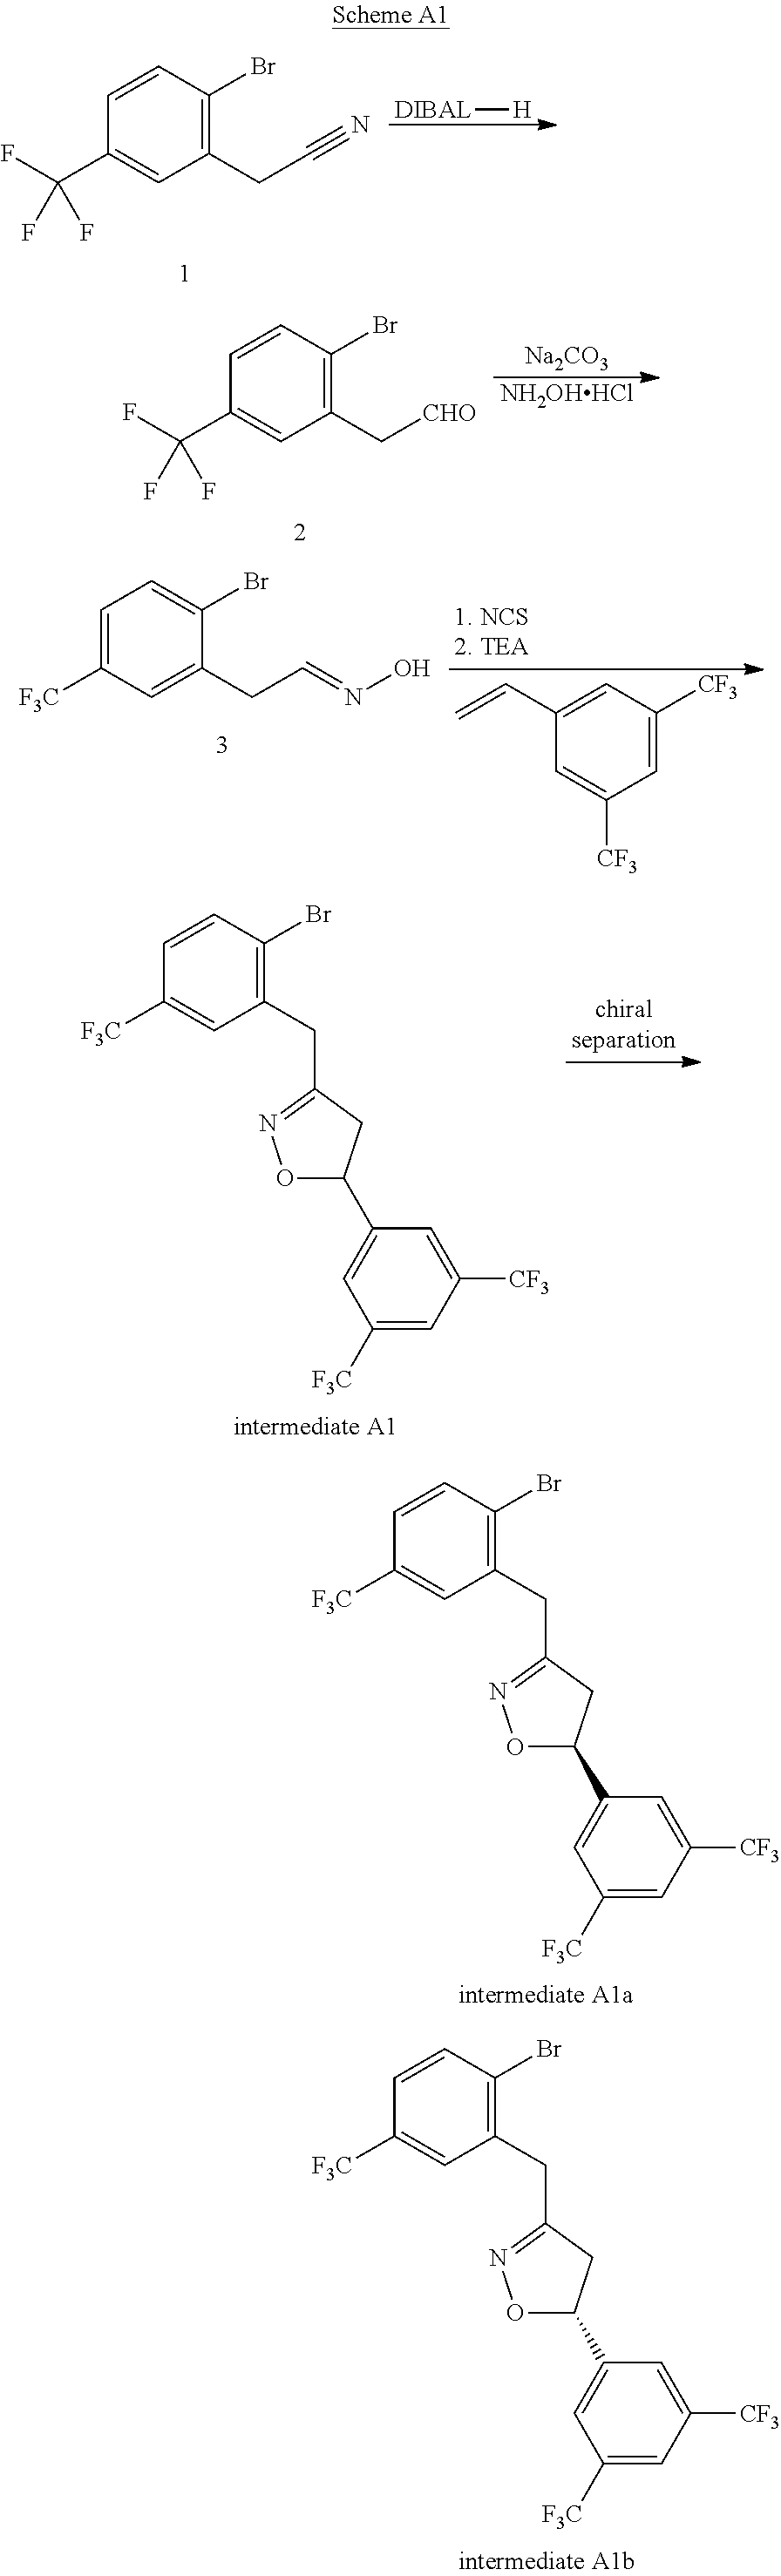 Monocyclic isoxazolines as inhibitors of cholesterol ester transfer protein